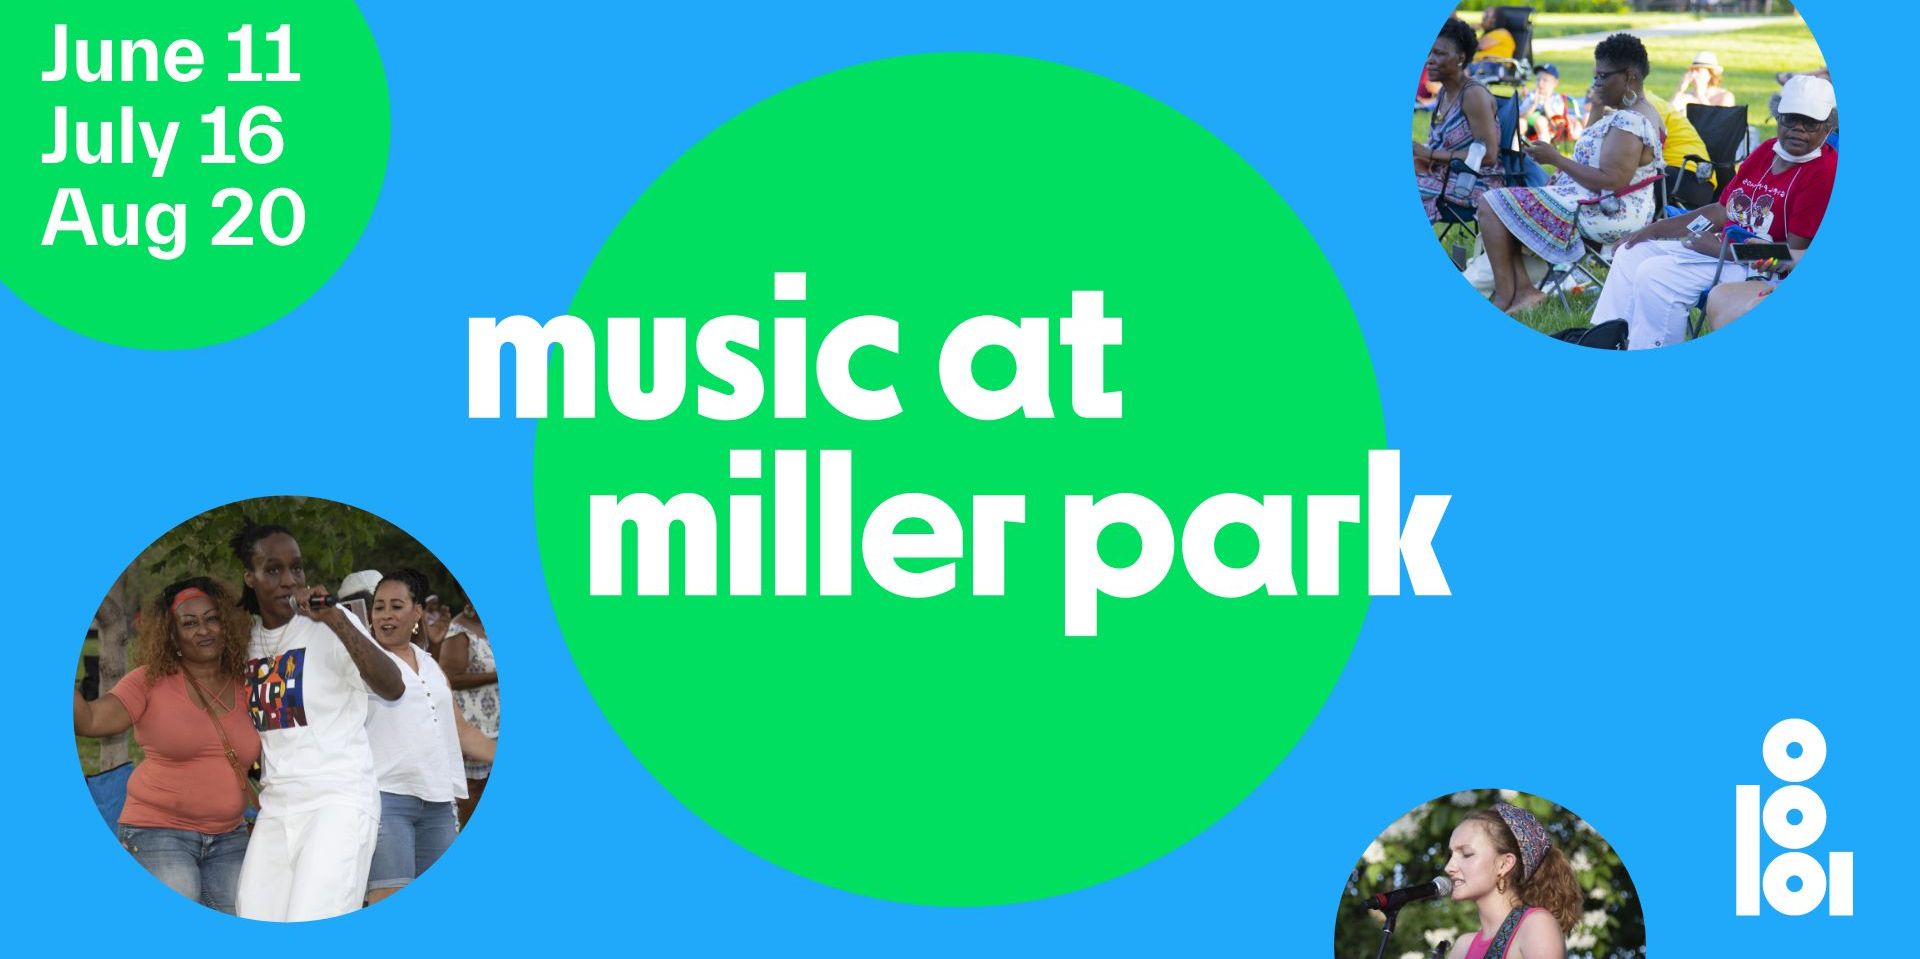 Music at Miller Park promotional image